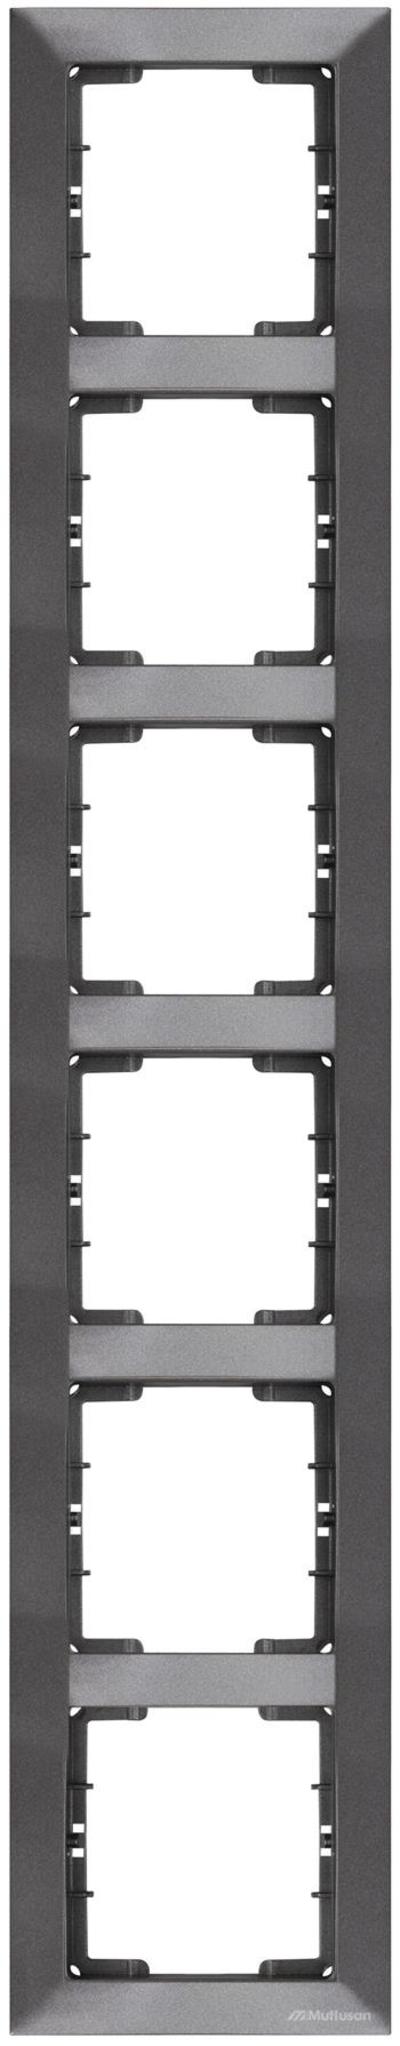 6fach Rahmen vertikal Anthrazit (DARIA Metall Optik)